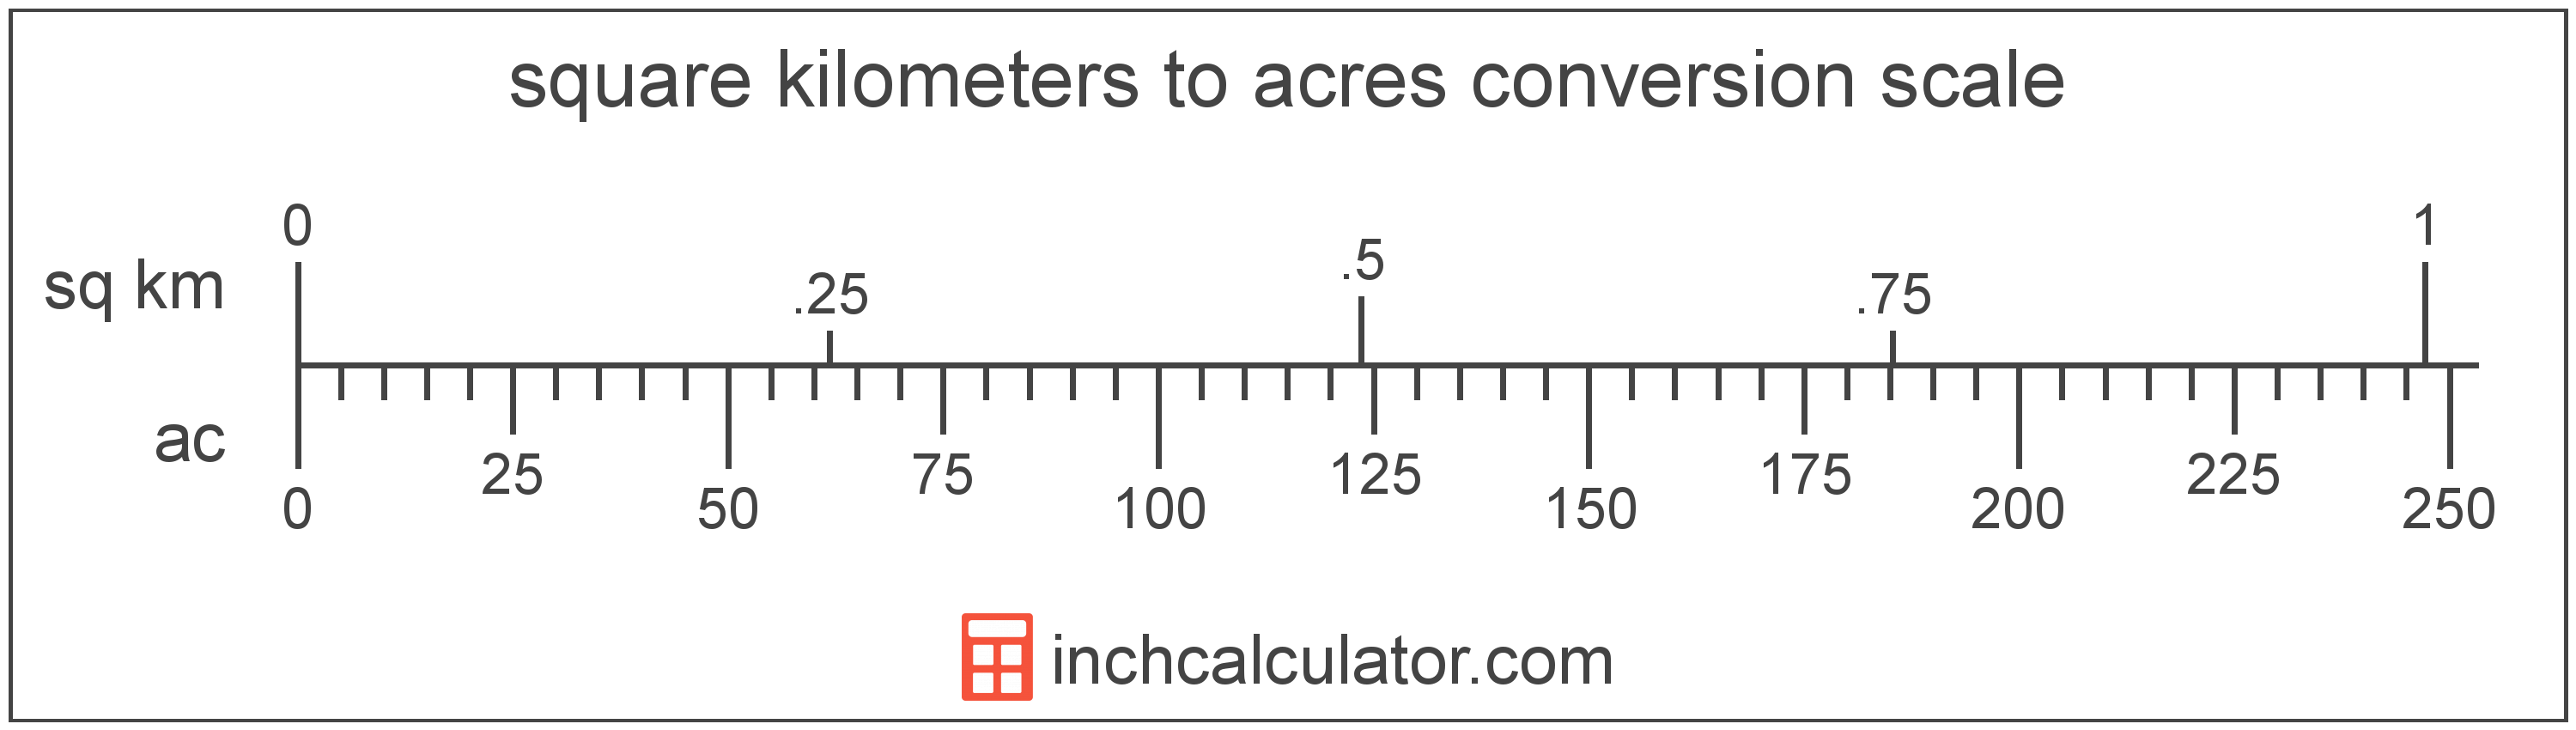 acres-to-square-kilometers-conversion-ac-to-sq-km